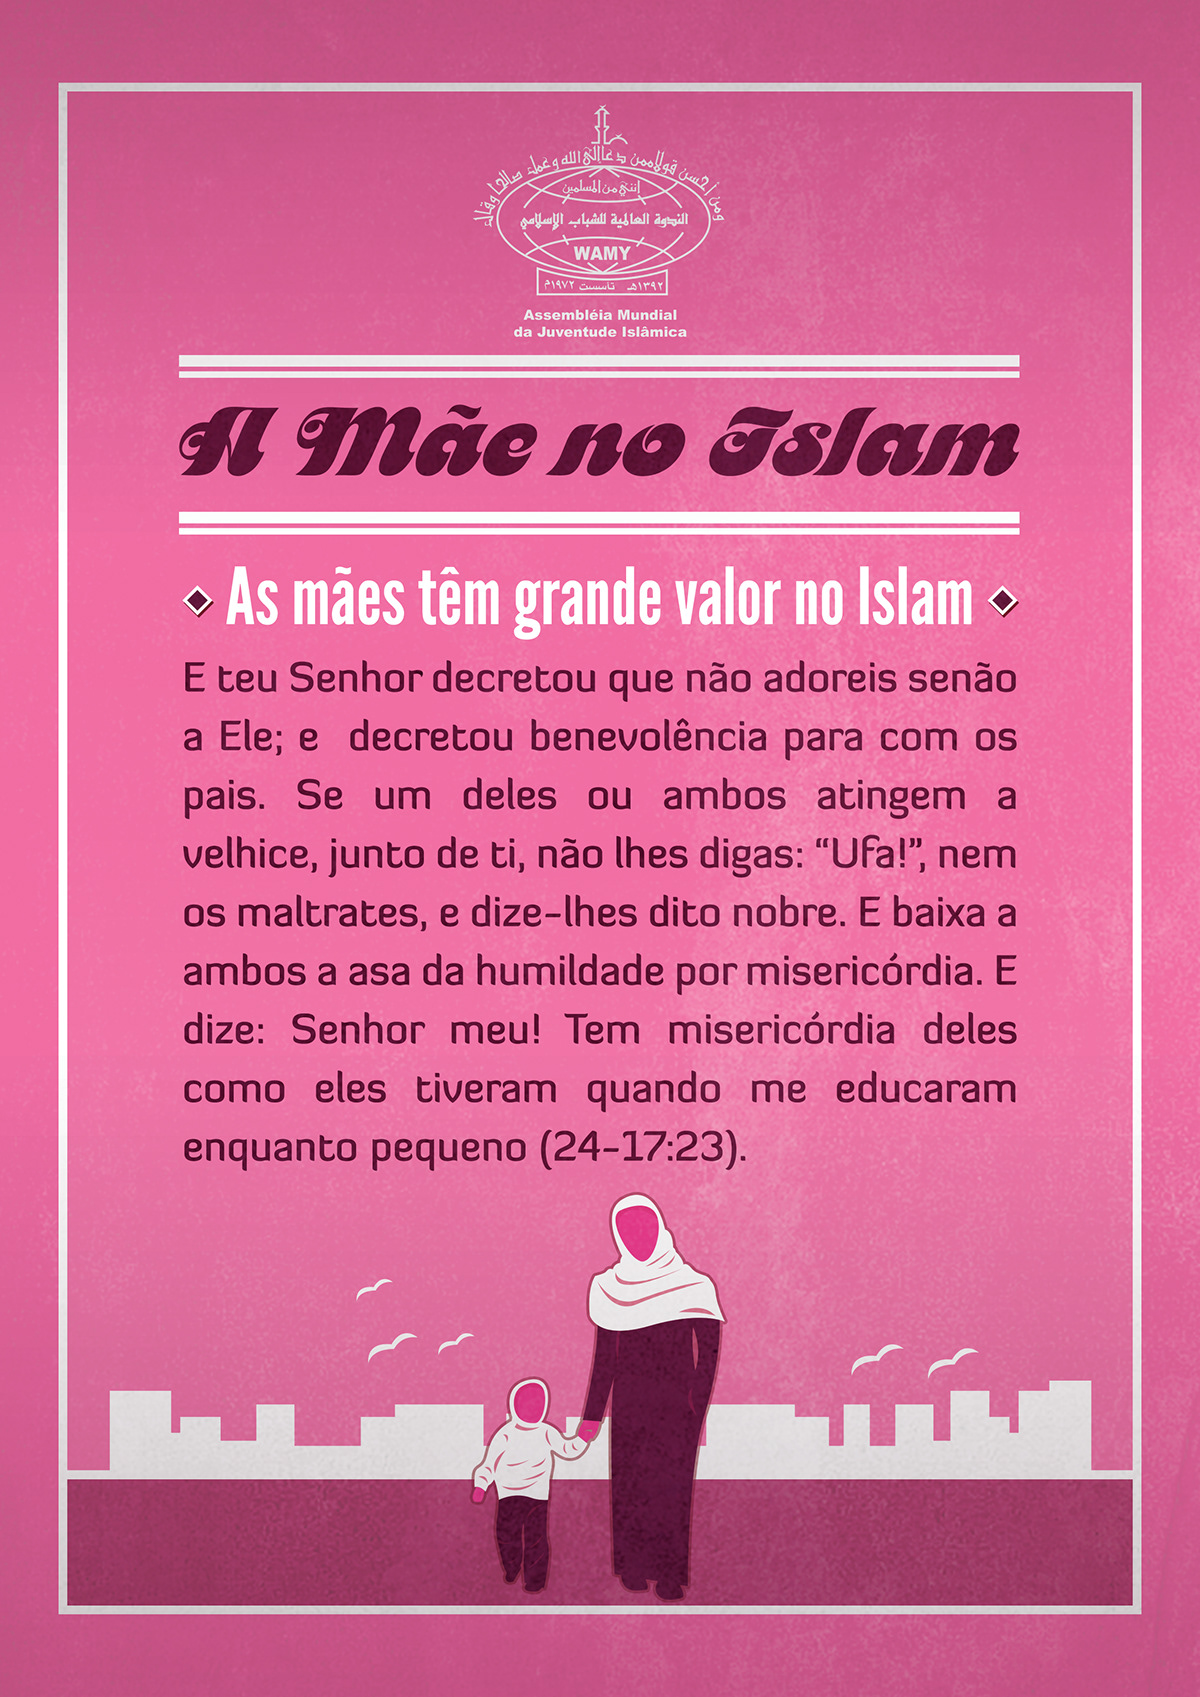 portuguese female mother mãe familia islam islamic poster